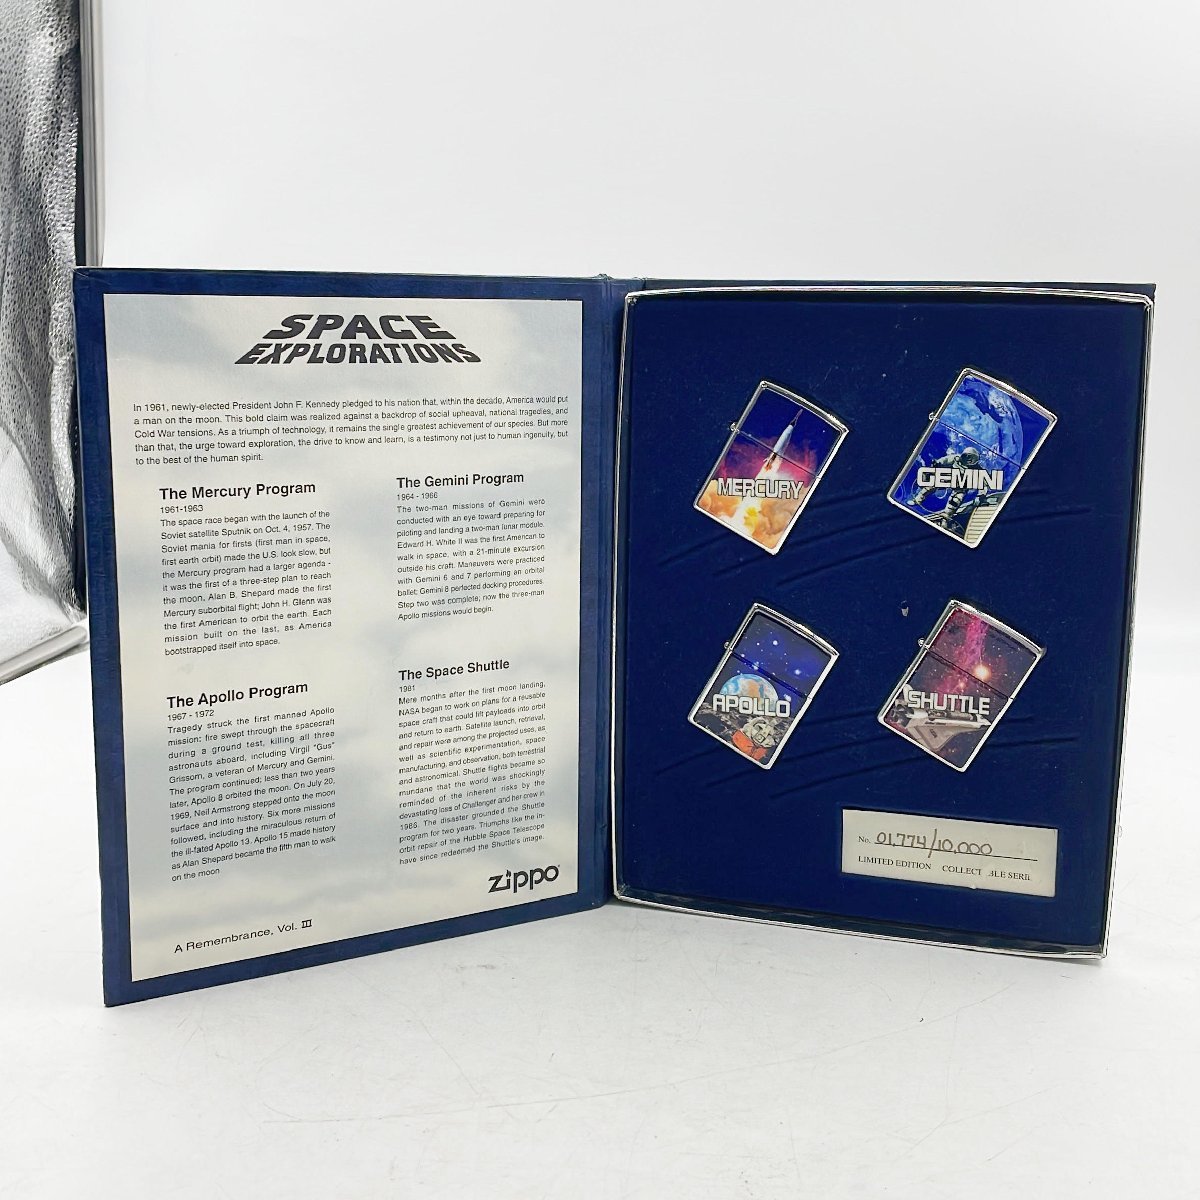 ZIPPO SPACE EXPLORATIONS　ジッポー　ライター　限定品　1997年製造 宇宙探査記念シリーズ 4個セット　アンティーク　コレクション